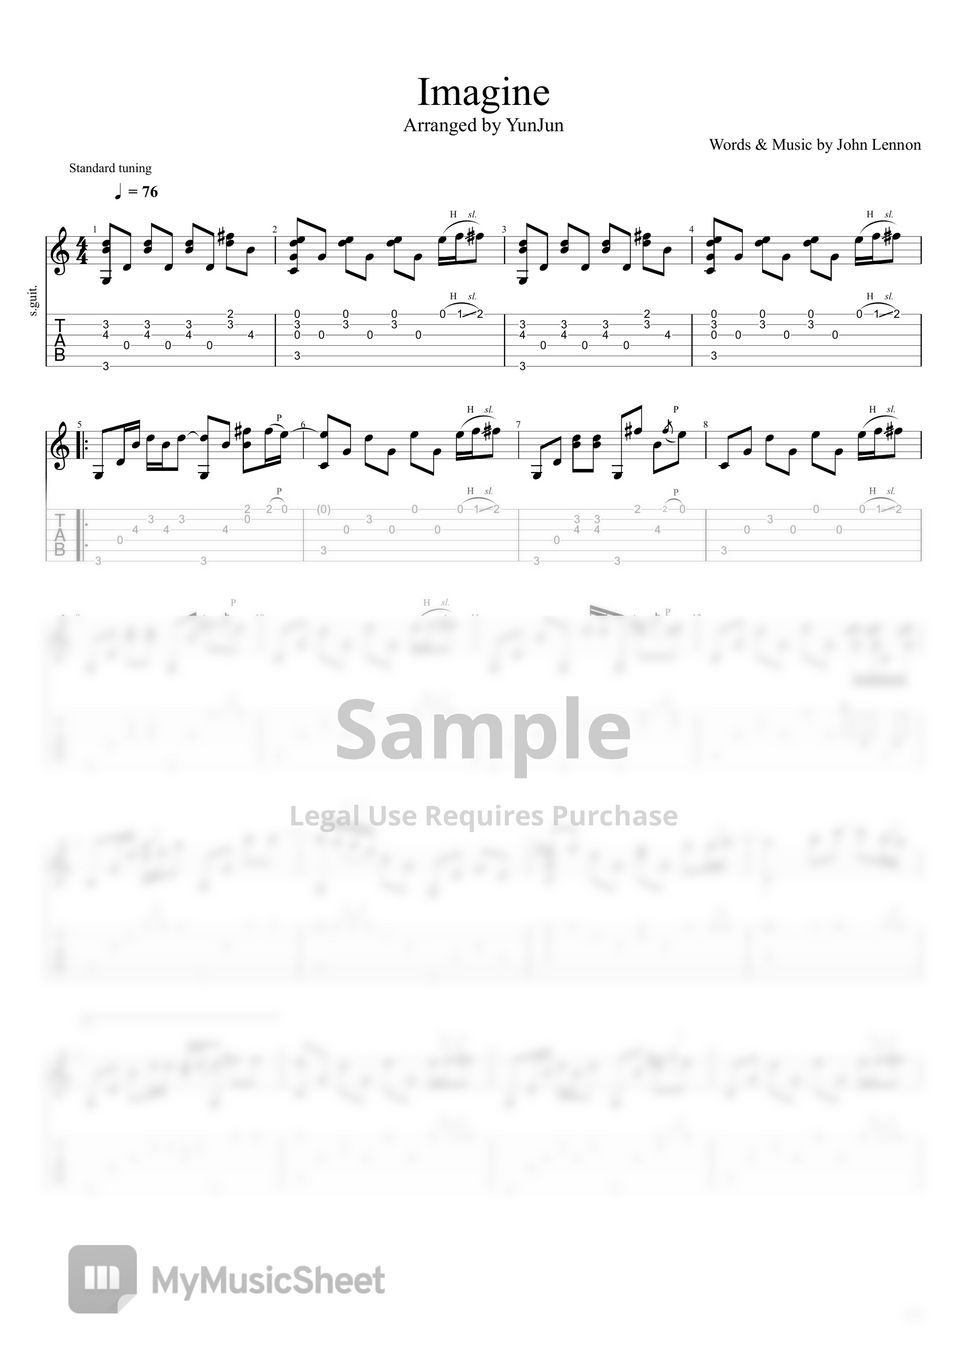 Imagine (John Lennon) - Partition /Tablature GUITARE, version